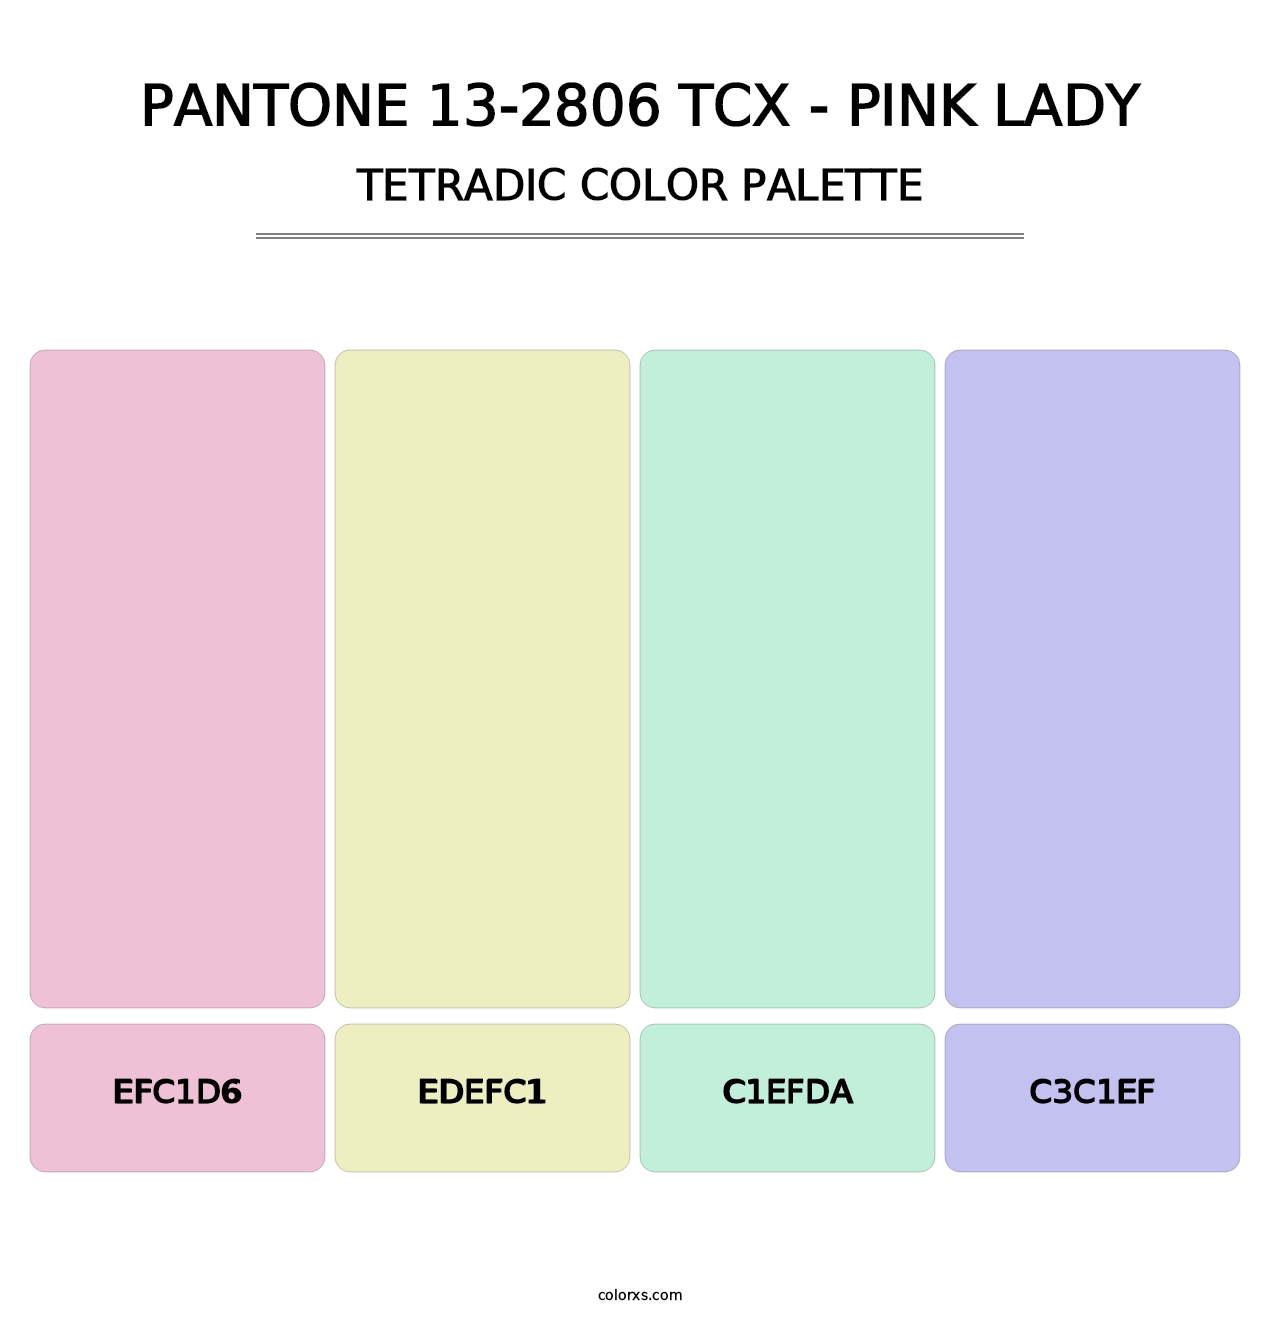 PANTONE 13-2806 TCX - Pink Lady - Tetradic Color Palette